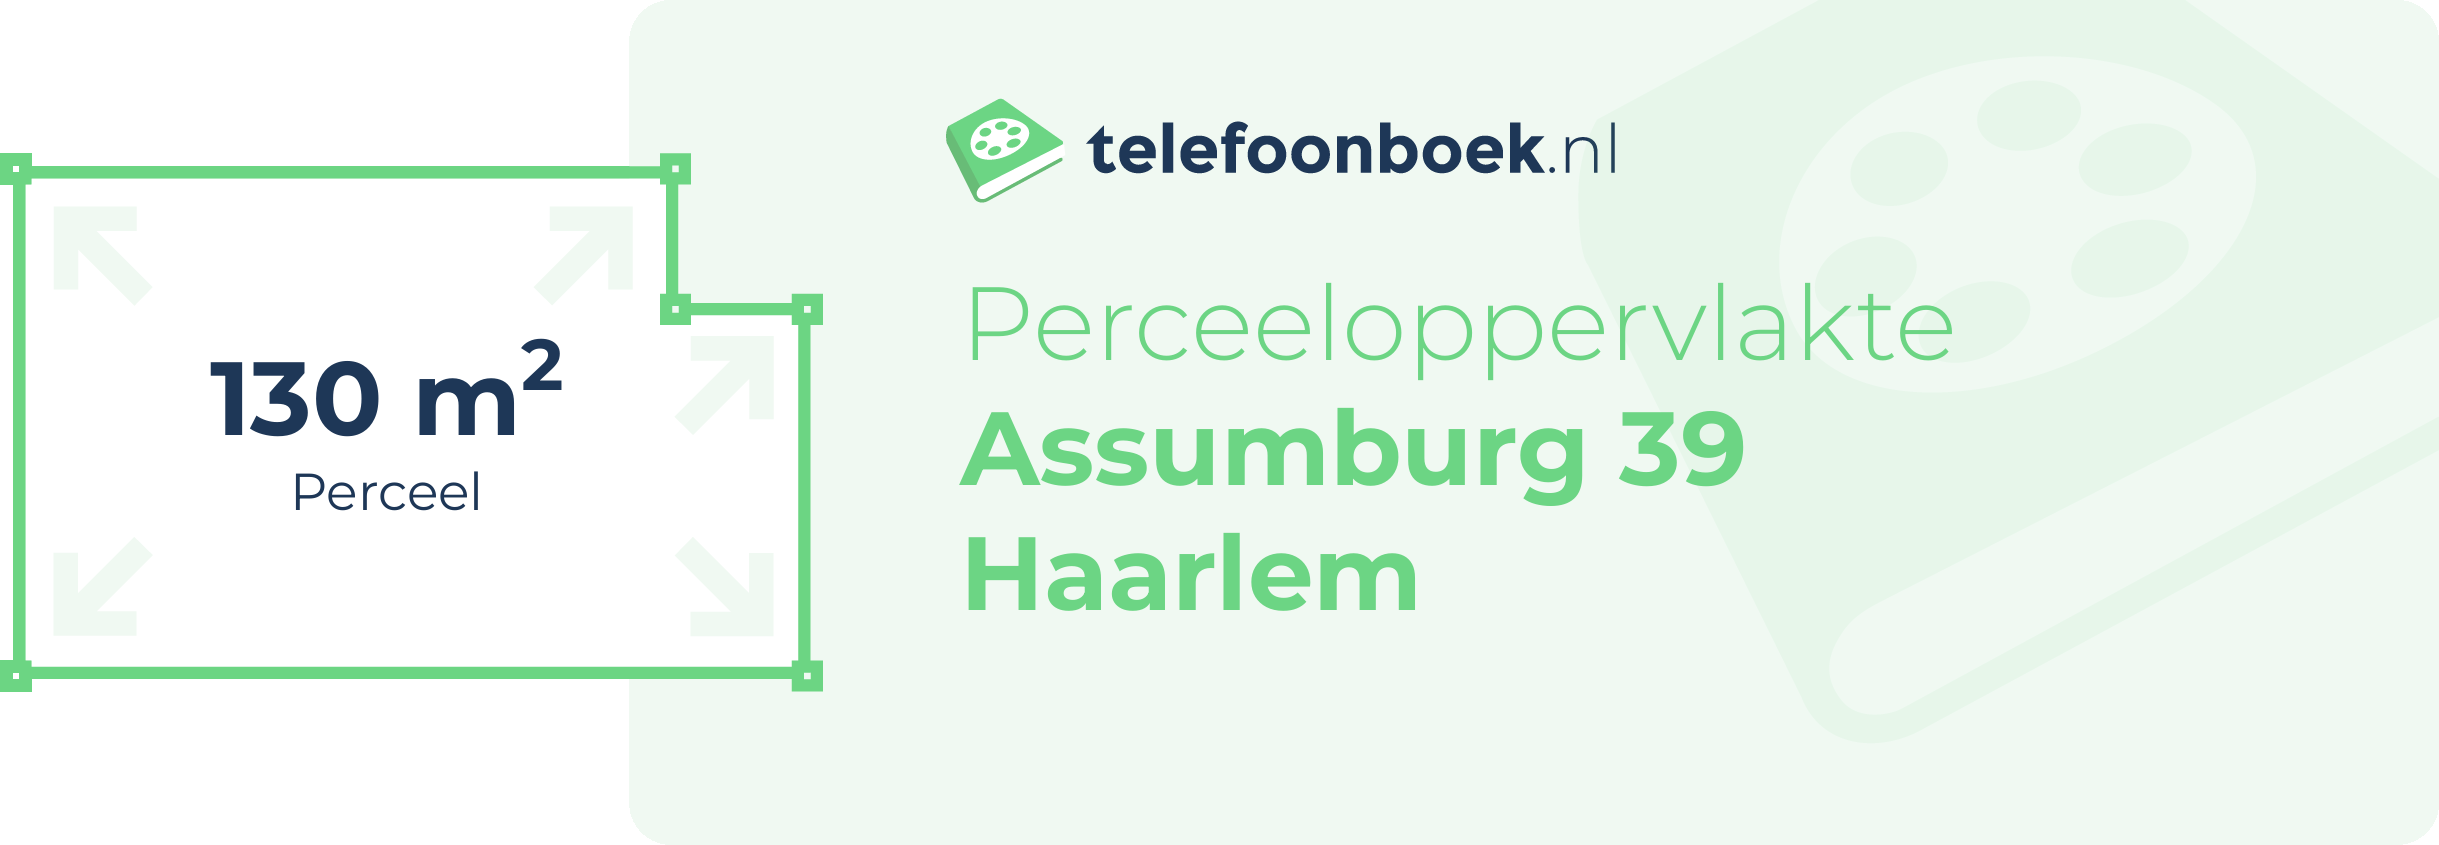 Perceeloppervlakte Assumburg 39 Haarlem